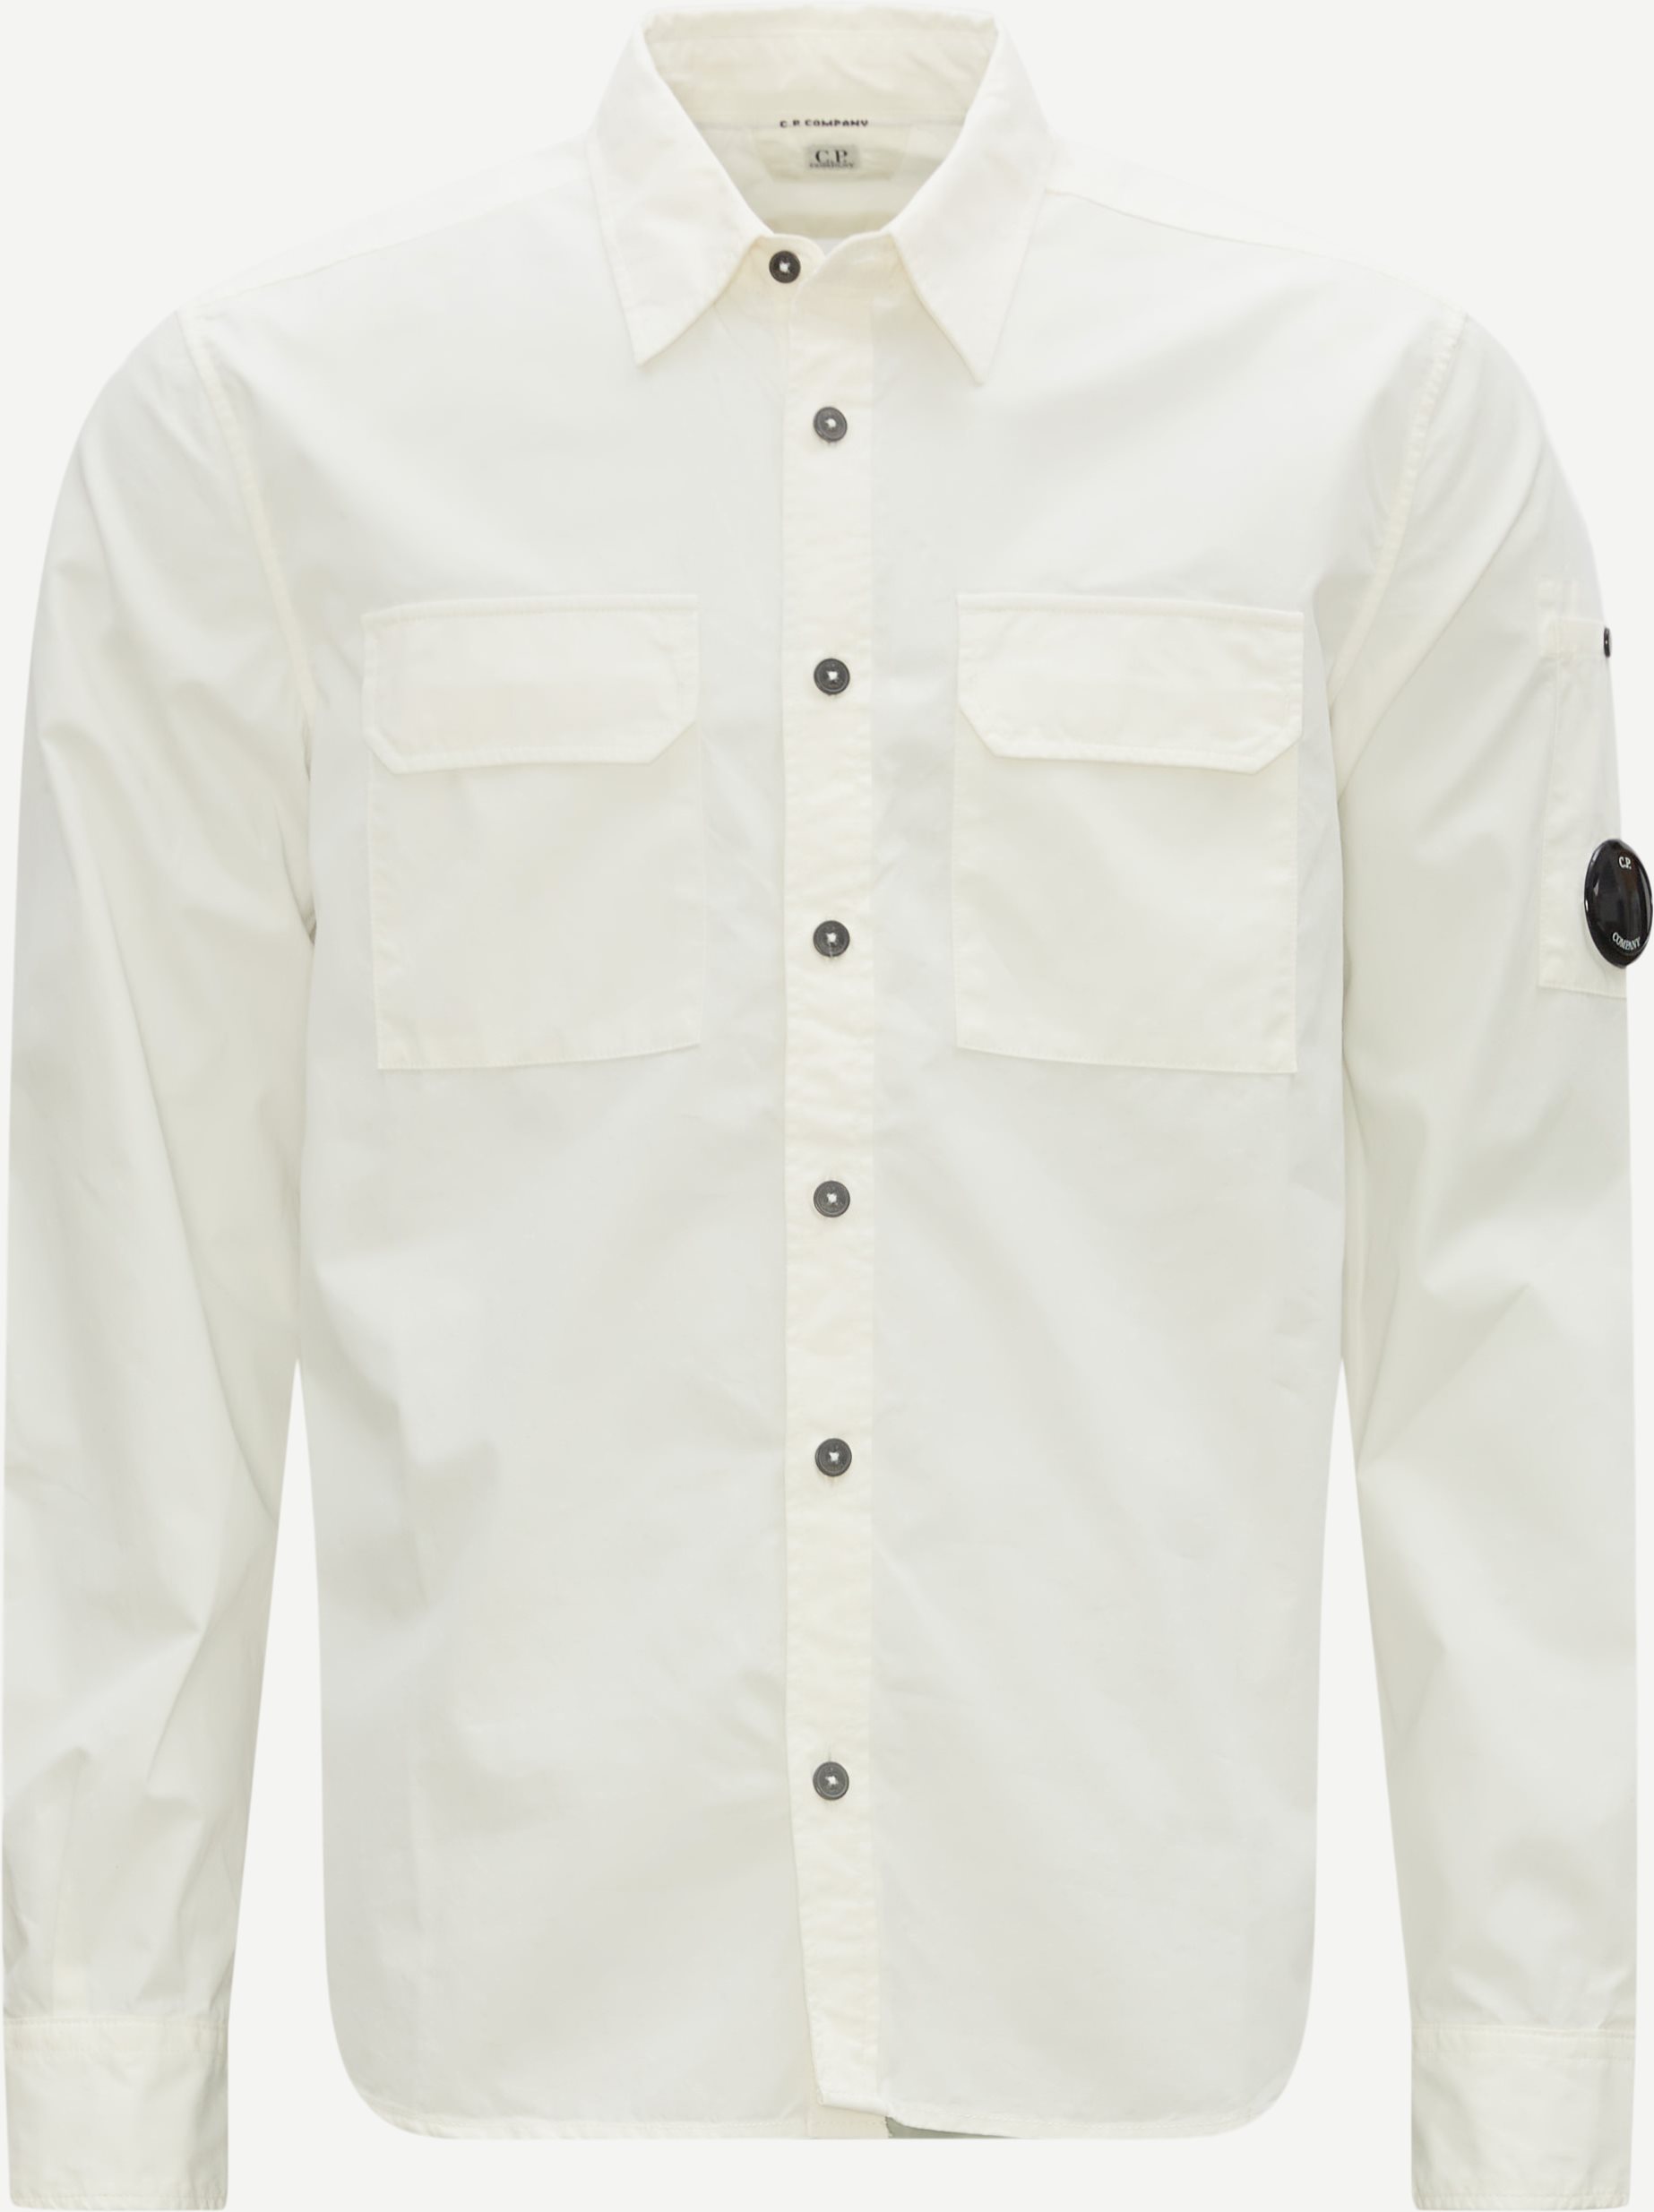 C.P. Company Shirts SH157A 2824G White